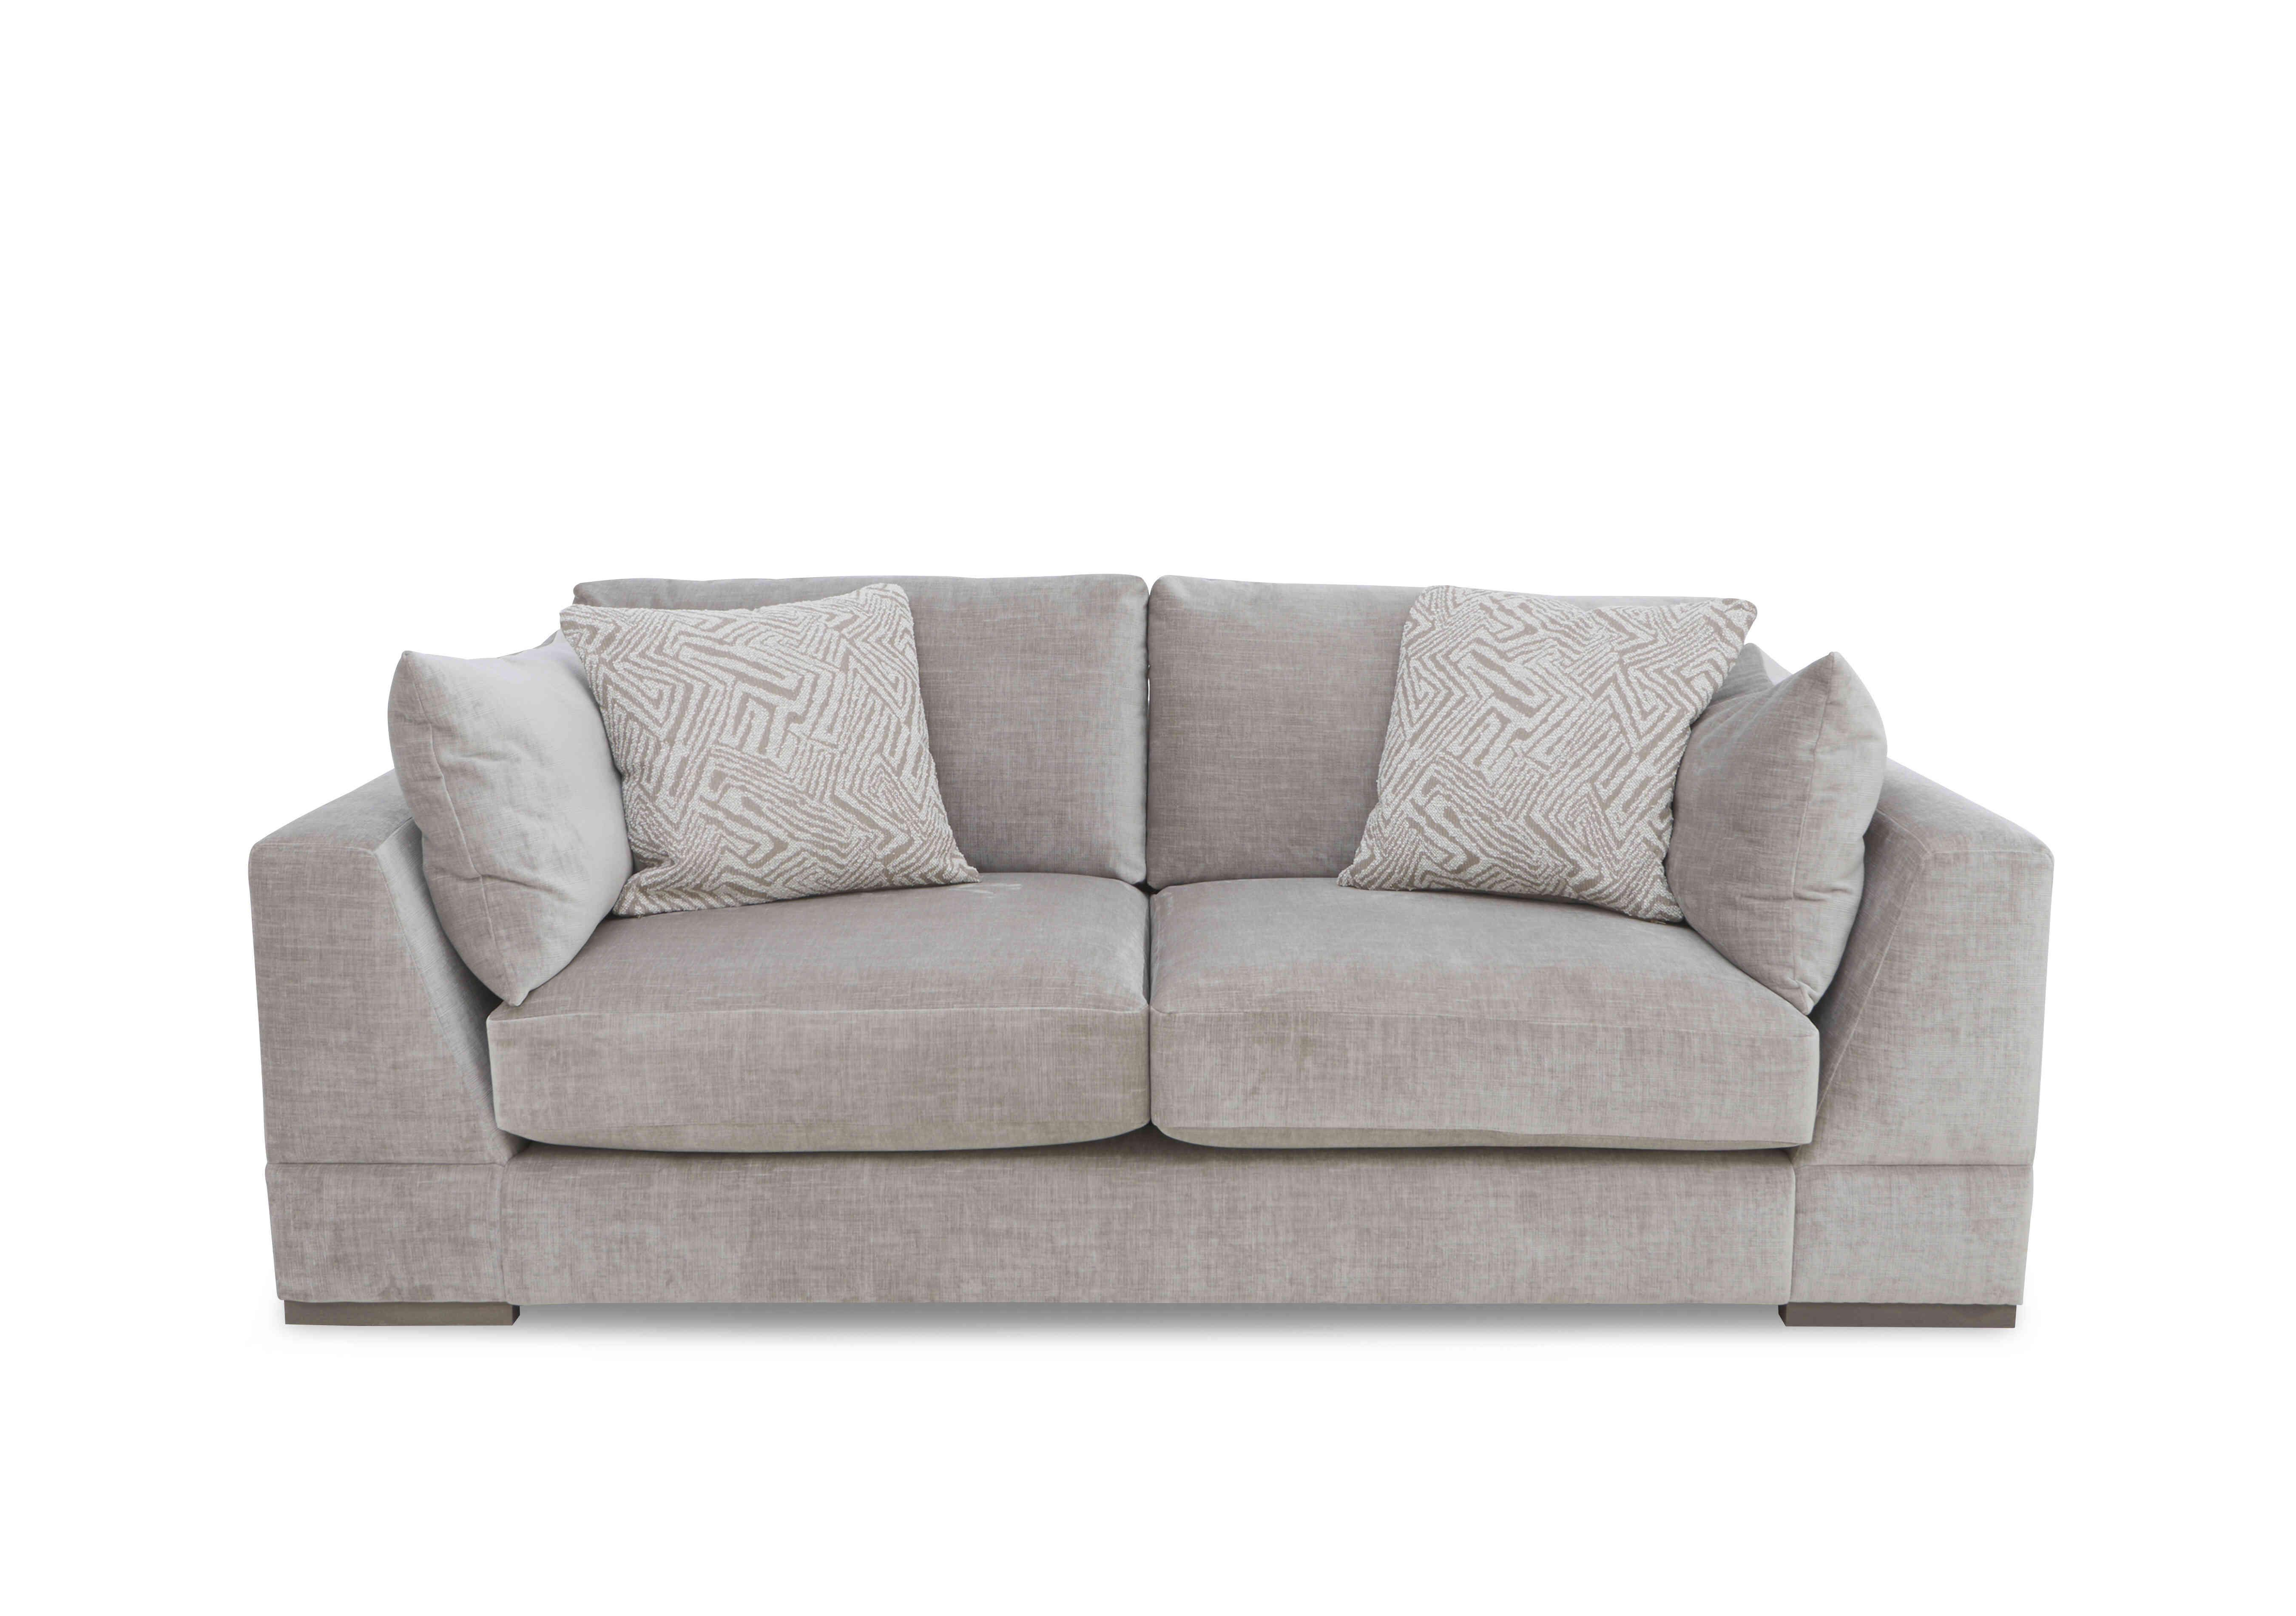 Billie 3 Seater Sofa in Stone Grey Ash Ft on Furniture Village